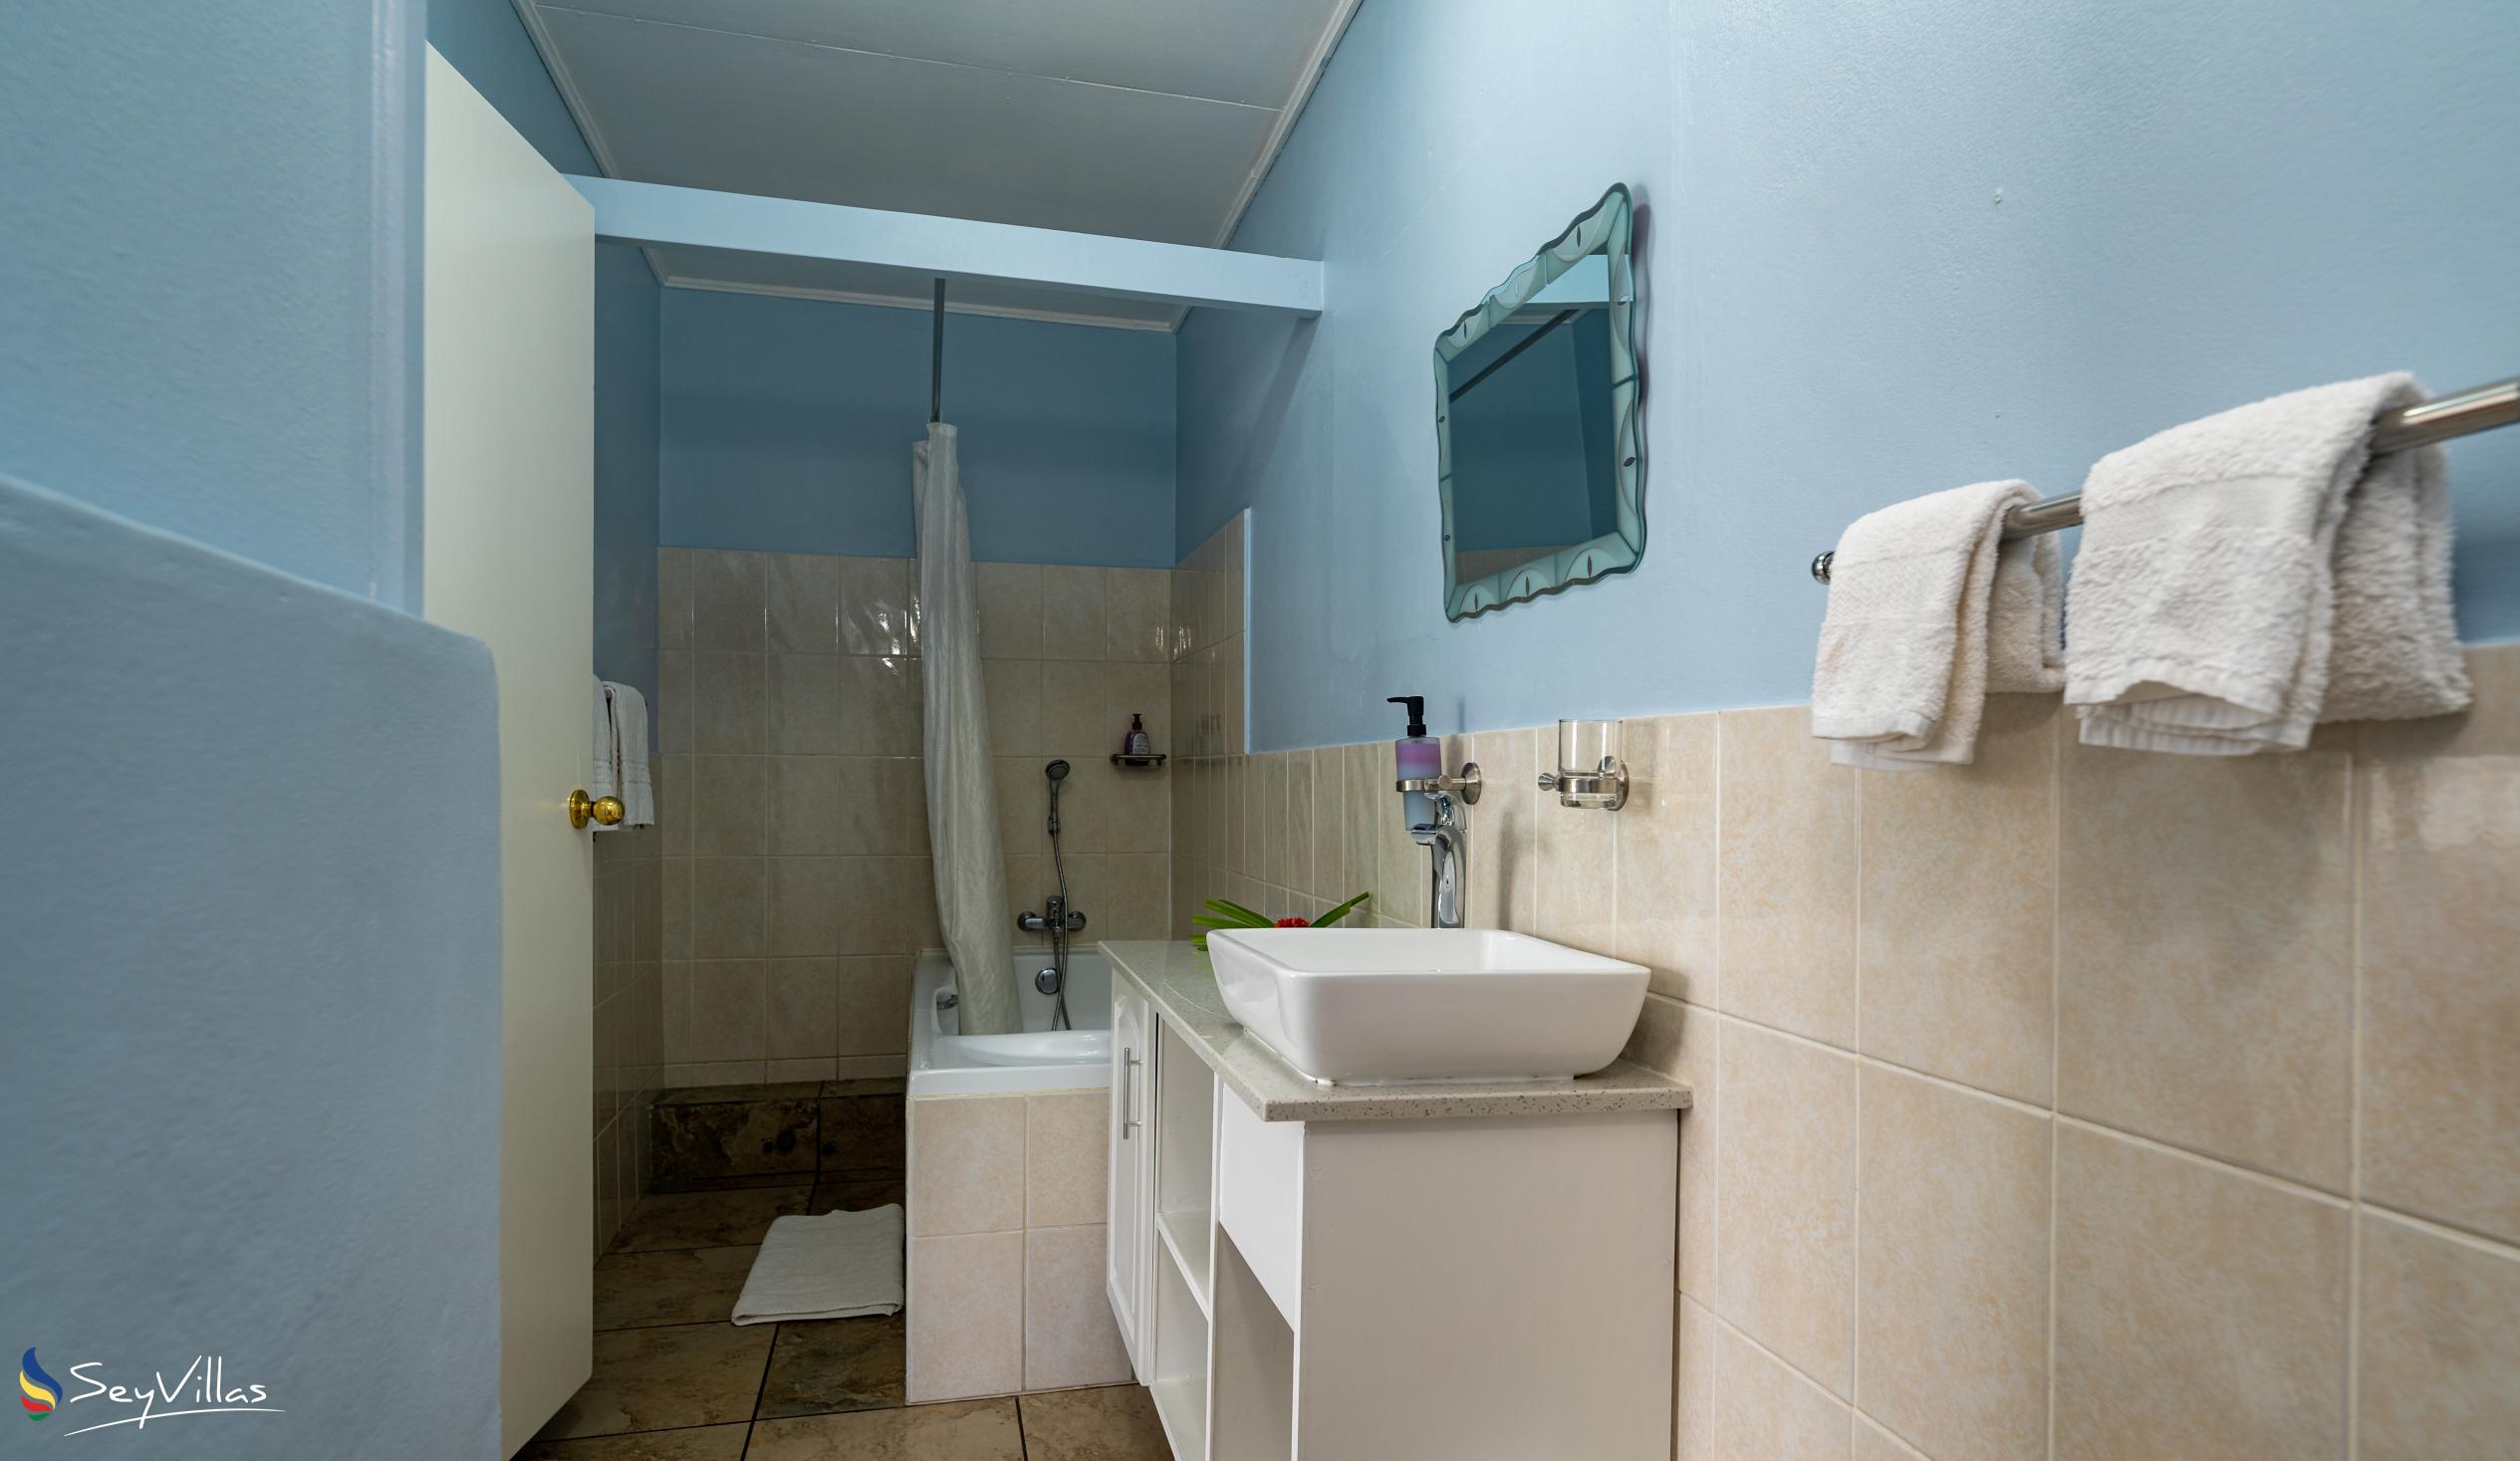 Photo 122: Stephna Residence - 2-Bedroom Villa - Mahé (Seychelles)